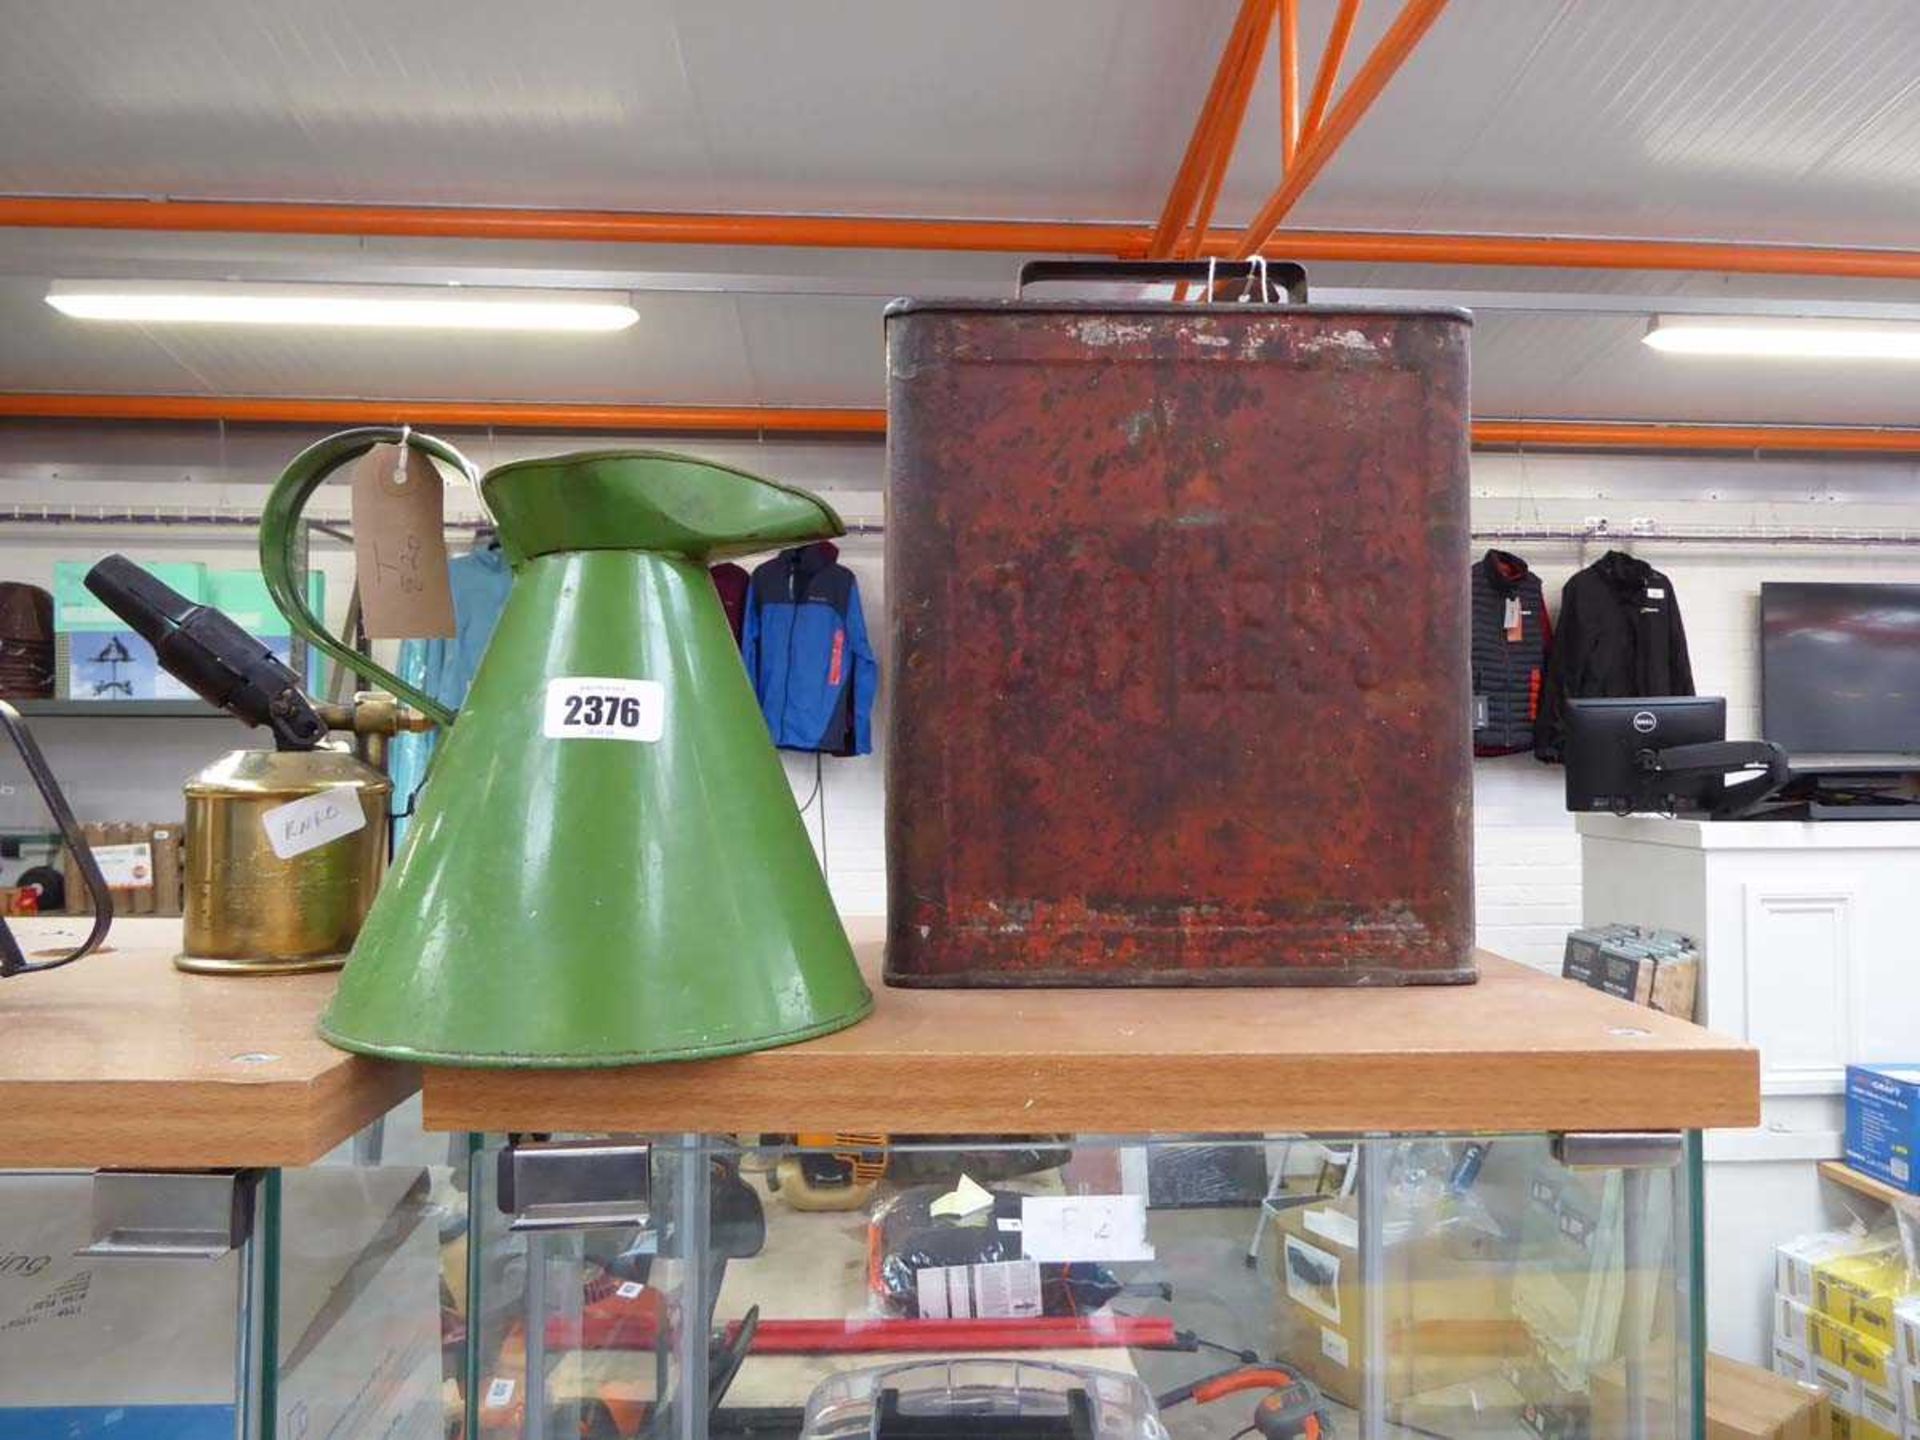 1 vintage Carless petrol can and a vintage oil jug / pourer